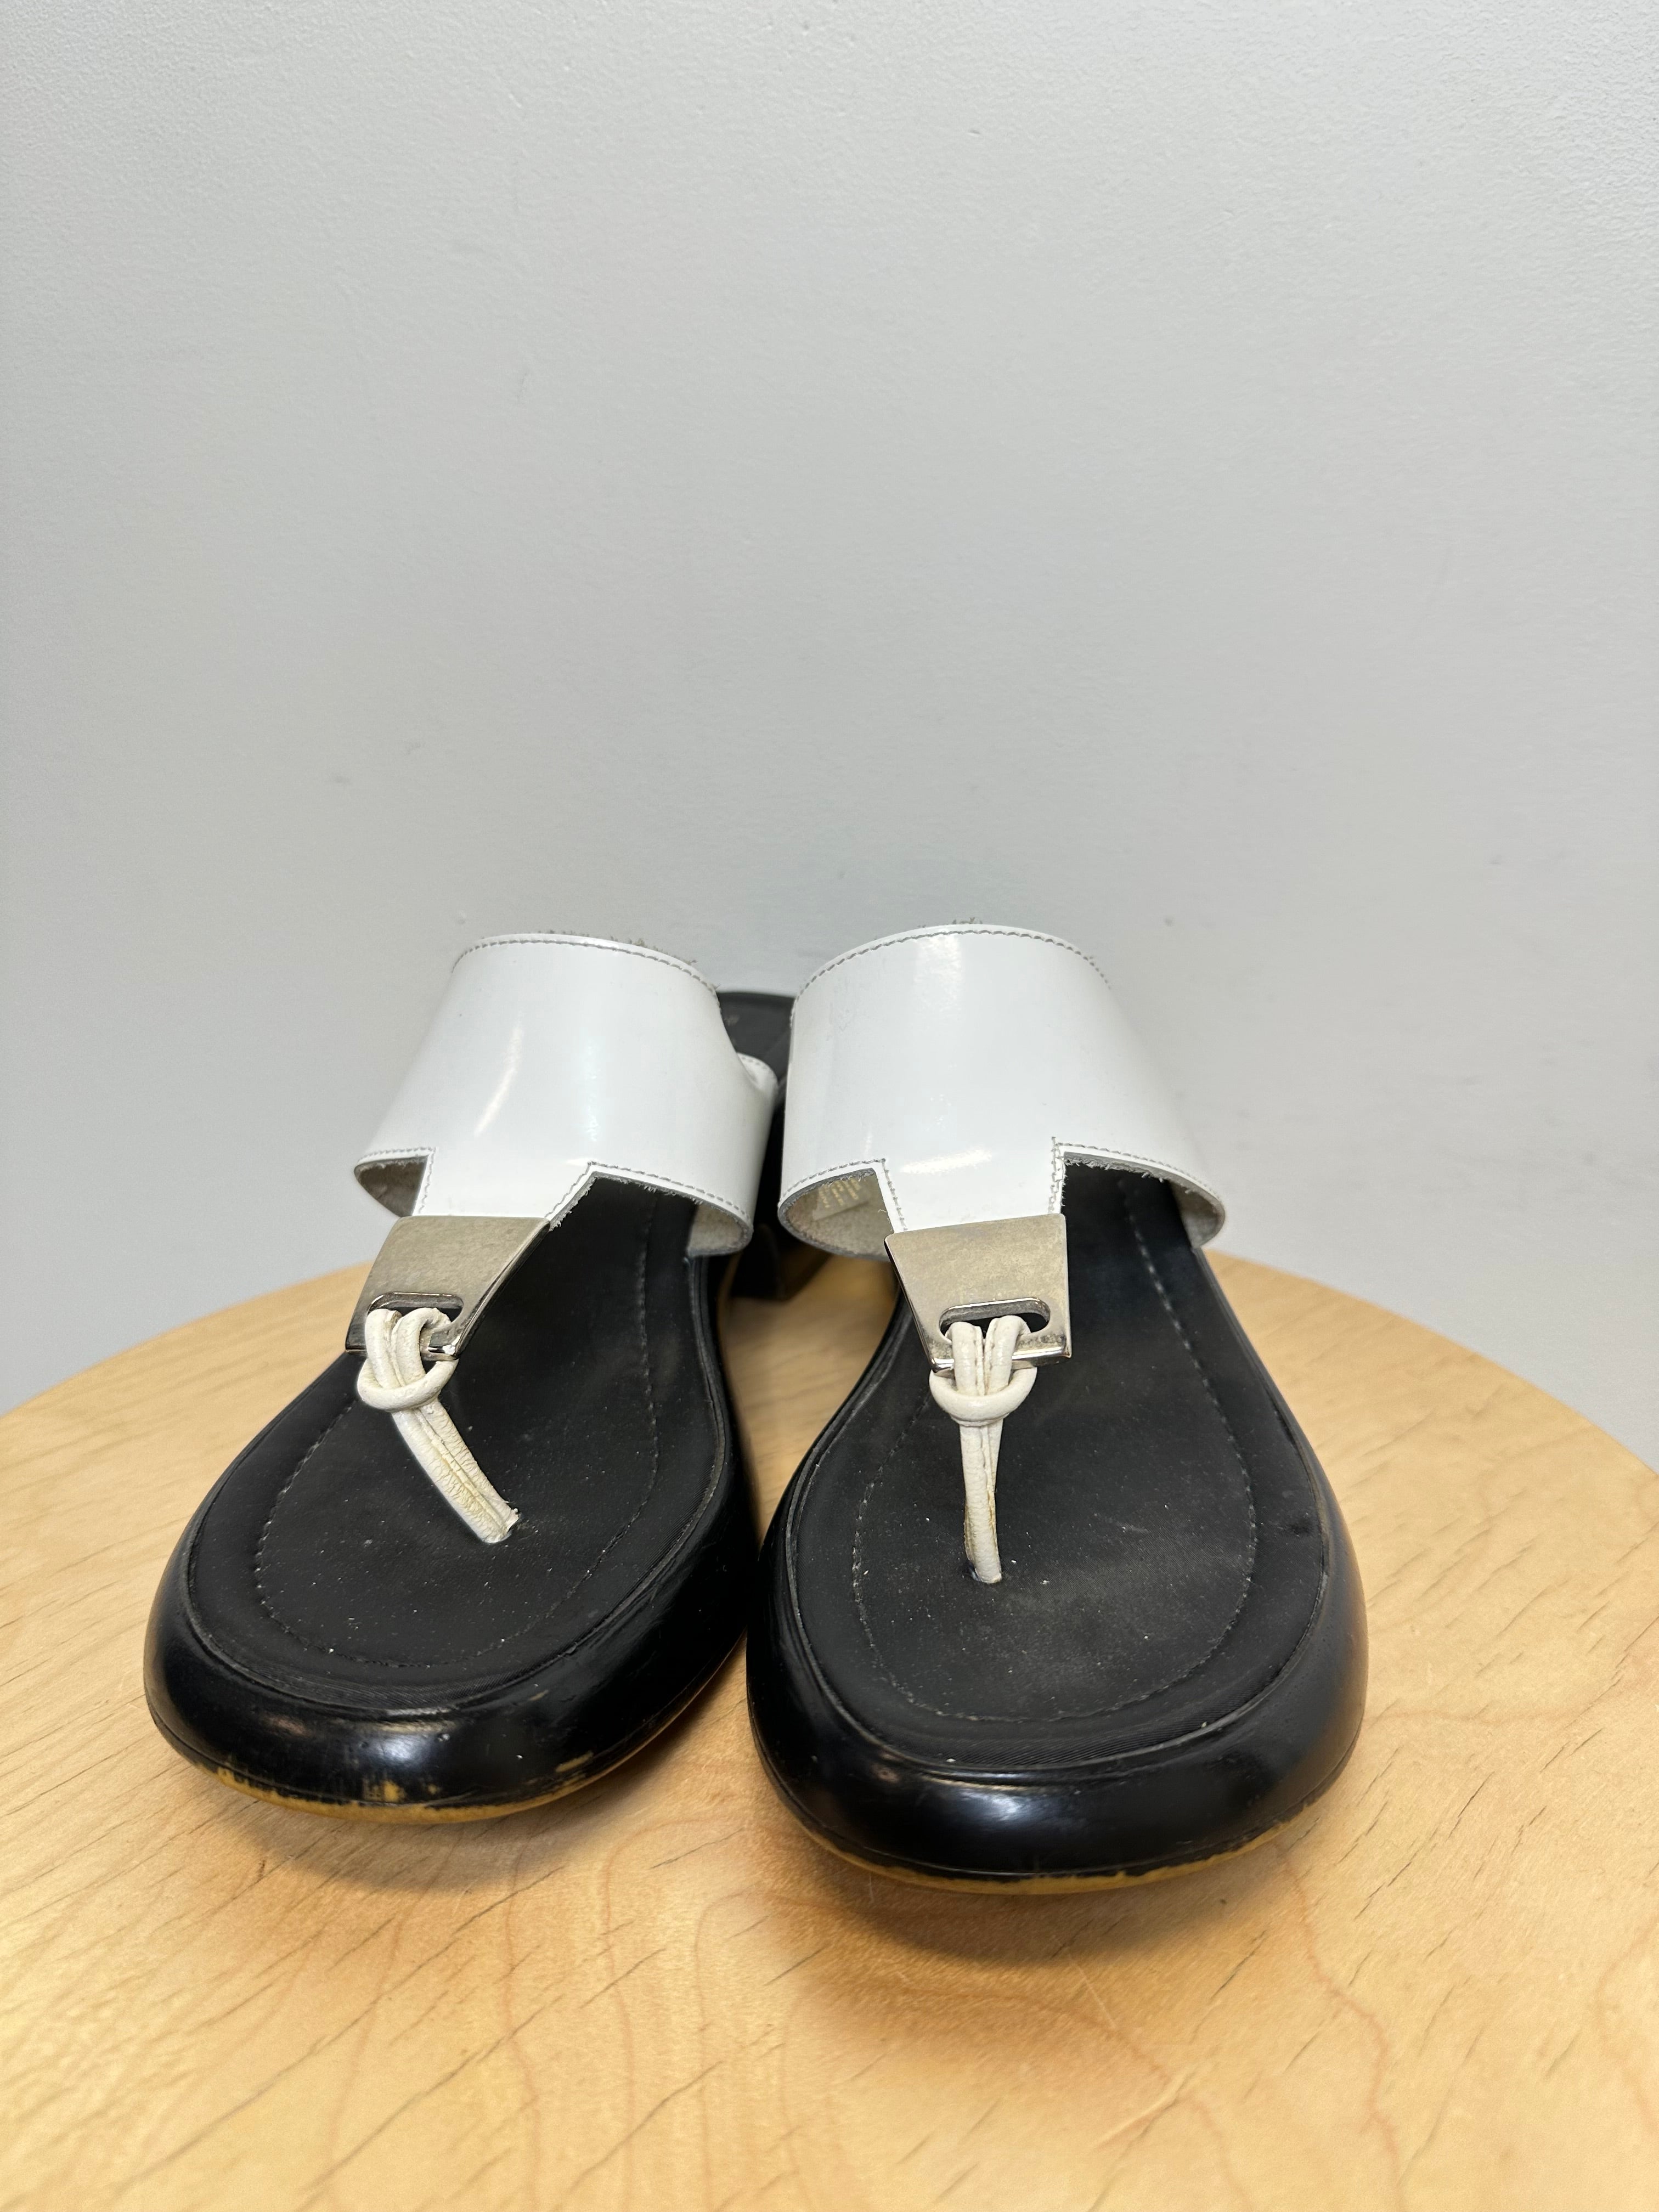 Vintage Black/White Leather Sandal - W8.5